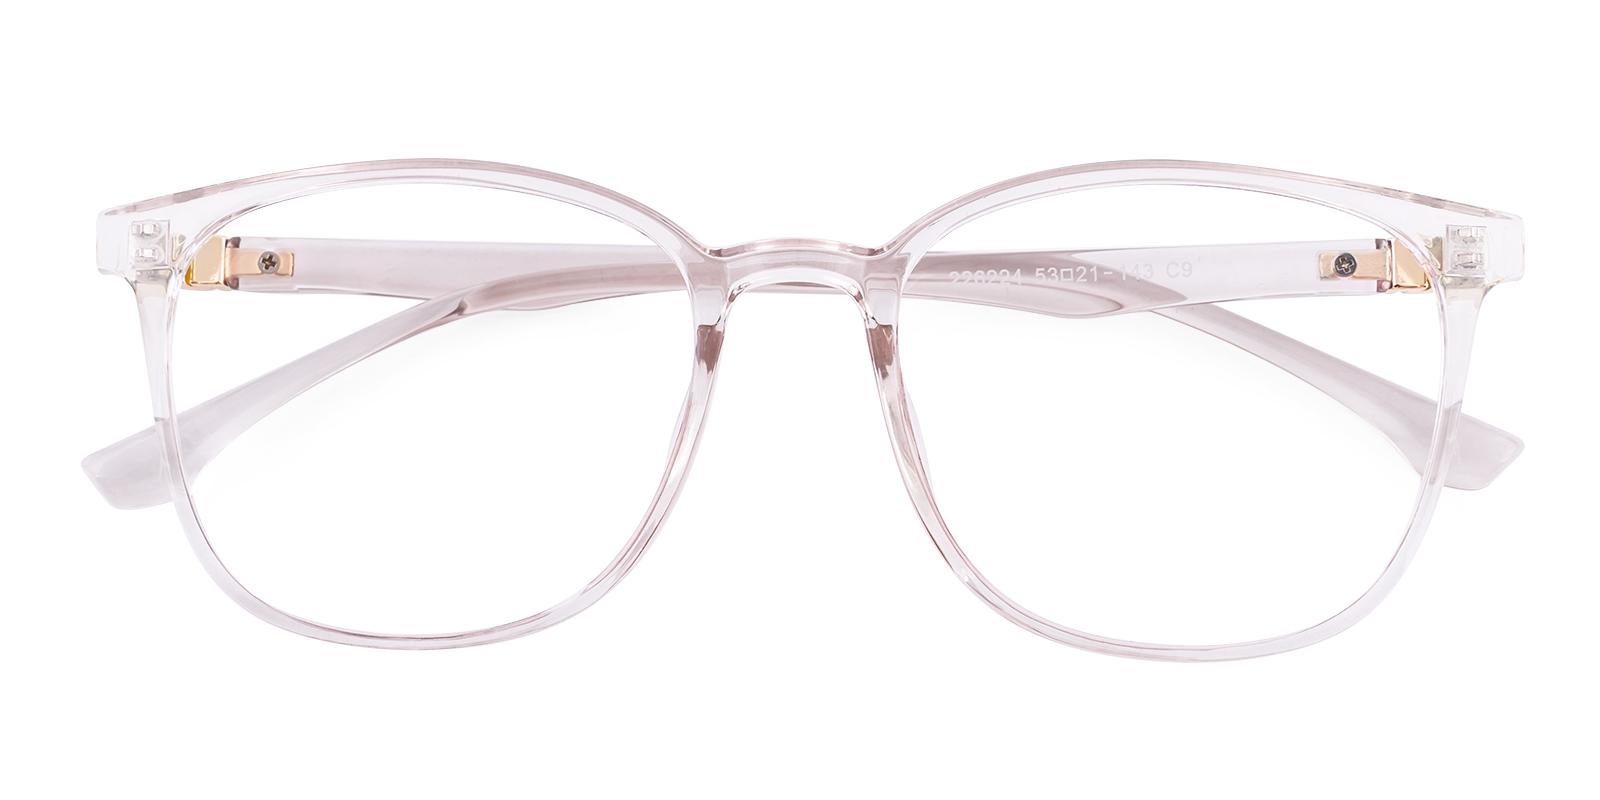 Tincteous Pink Plastic Eyeglasses , UniversalBridgeFit Frames from ABBE Glasses